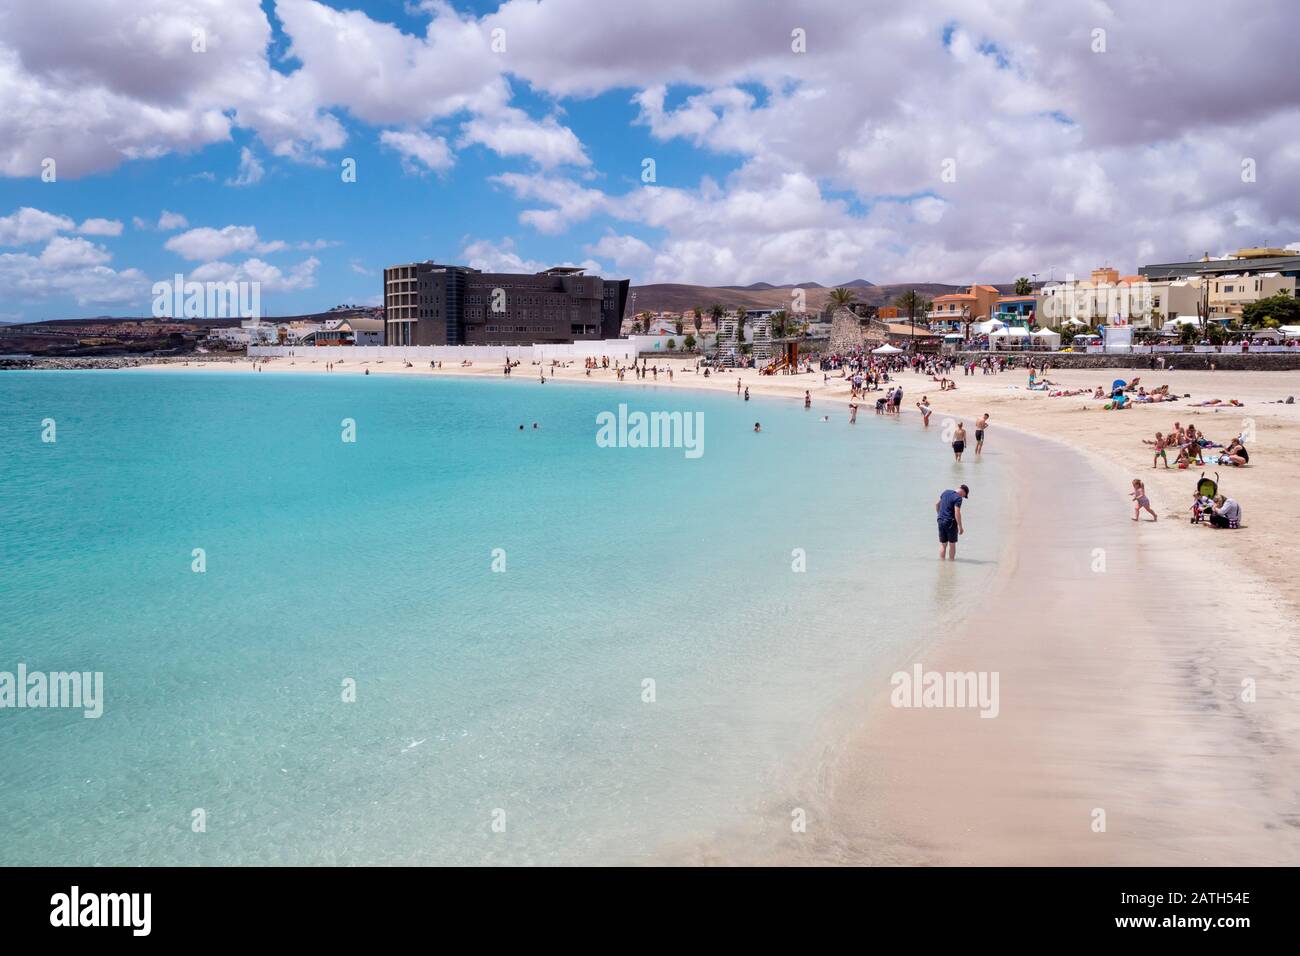 Rosario beach fotografías e imágenes de alta resolución - Alamy